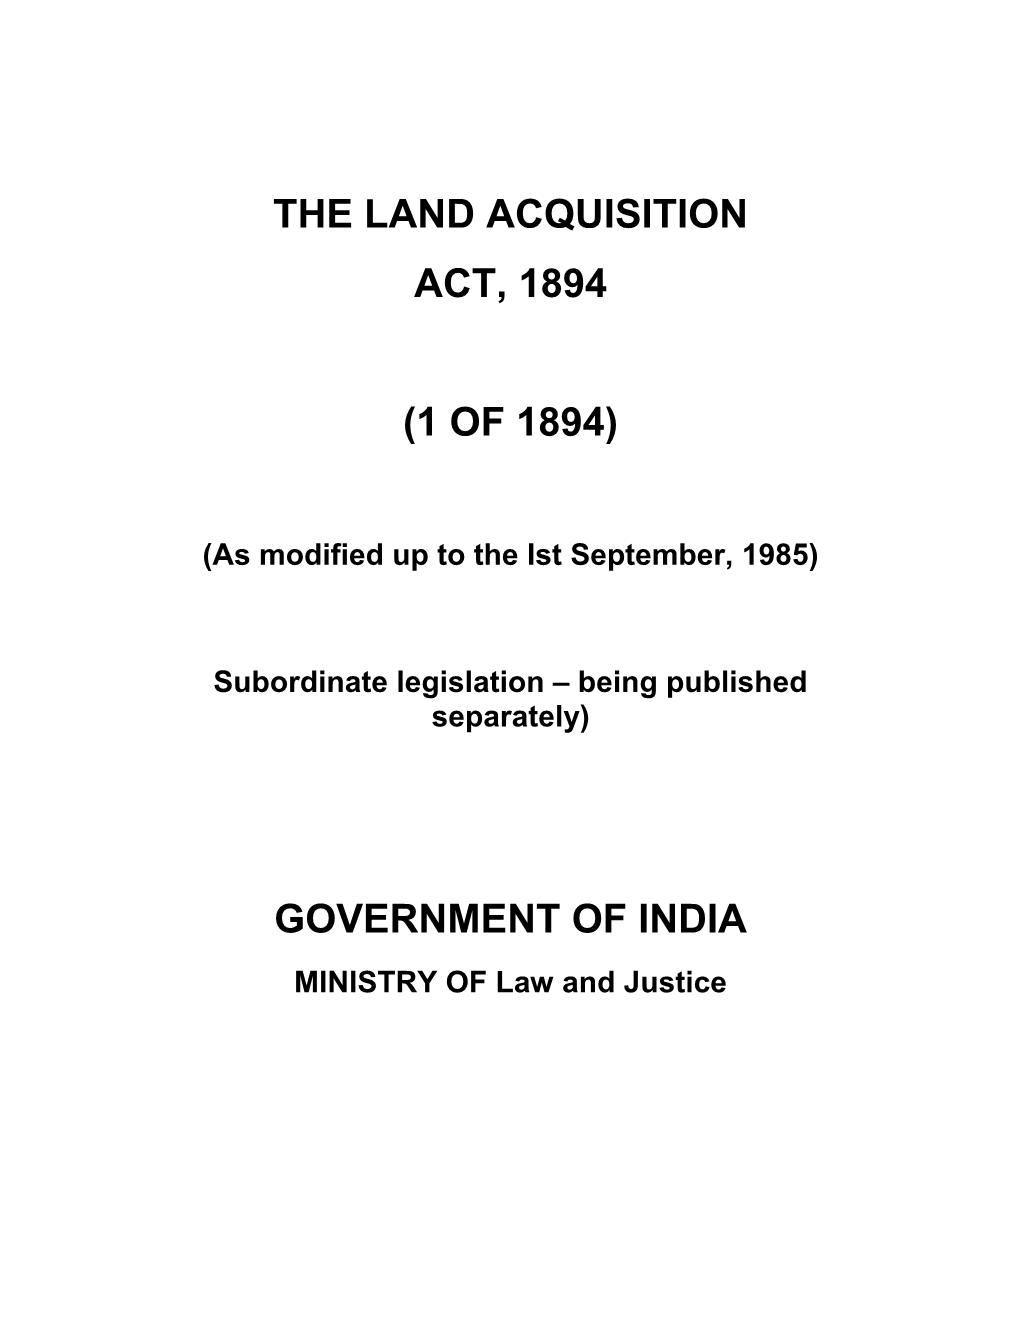 The Land Acquisition